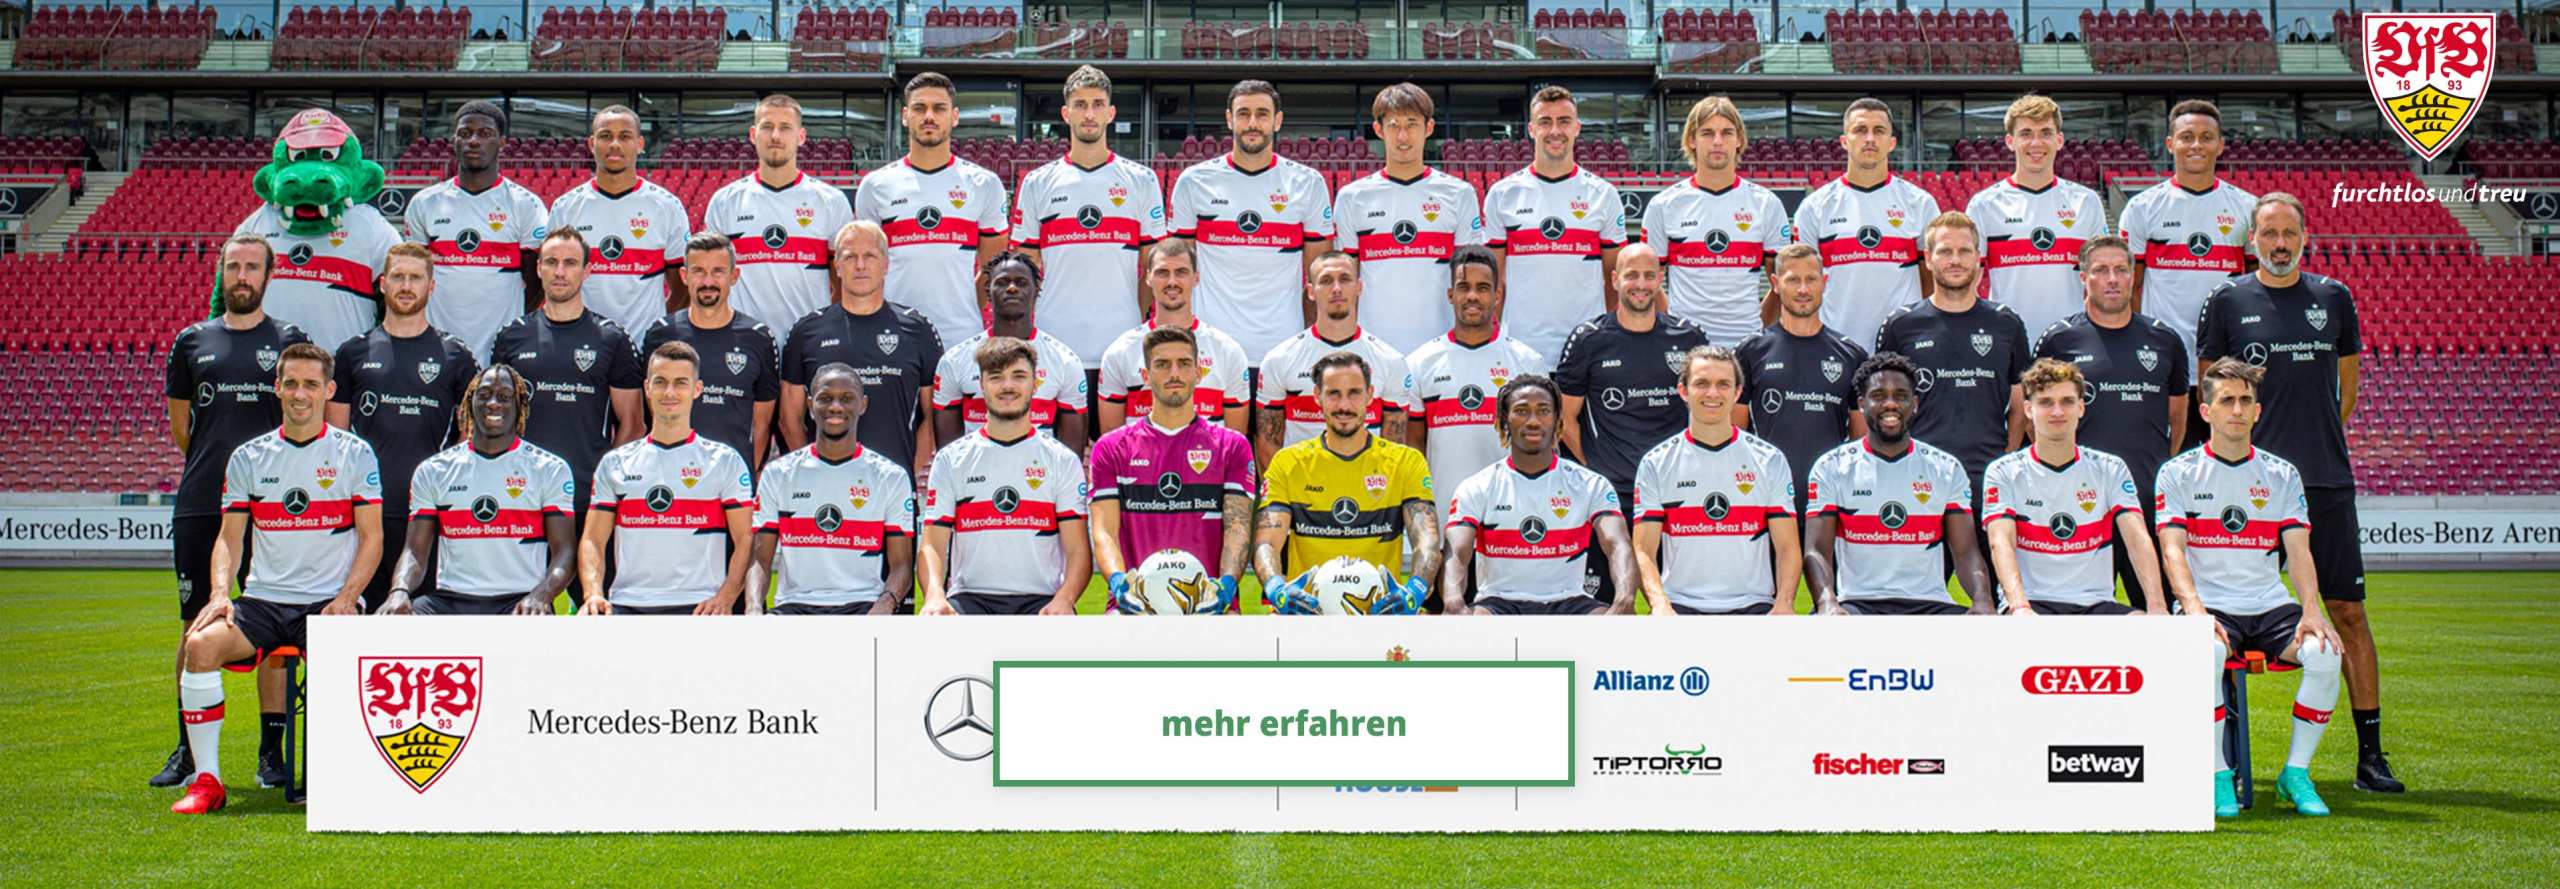 VfB Stuttgart Mannschaftsfoto Header